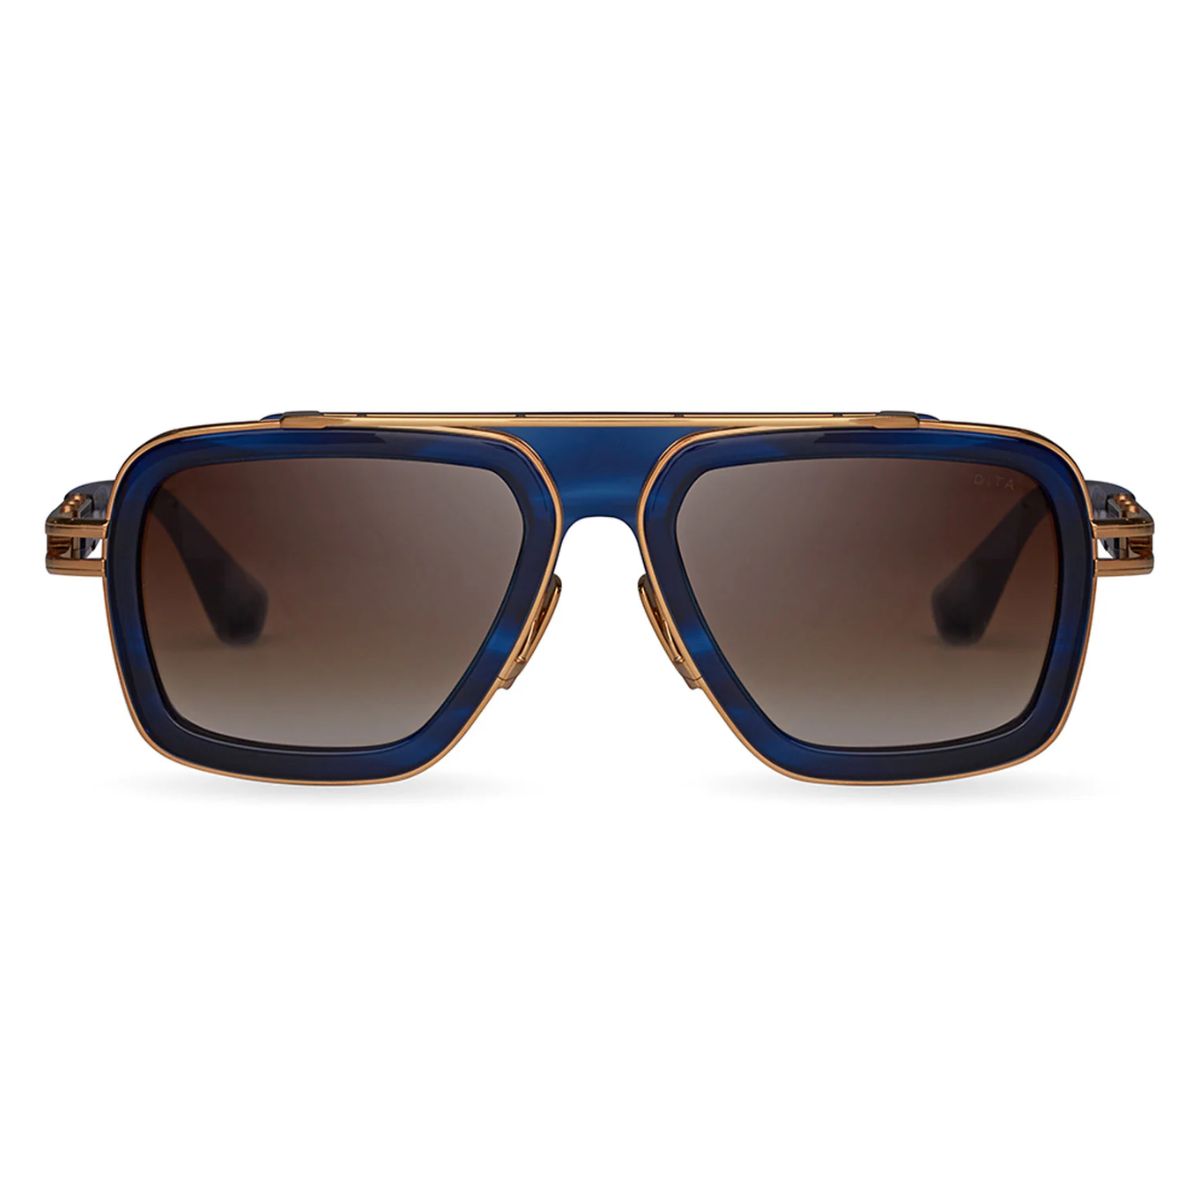 "Stylish Square Sunglasses For Both Men's & Women's | Optorium"